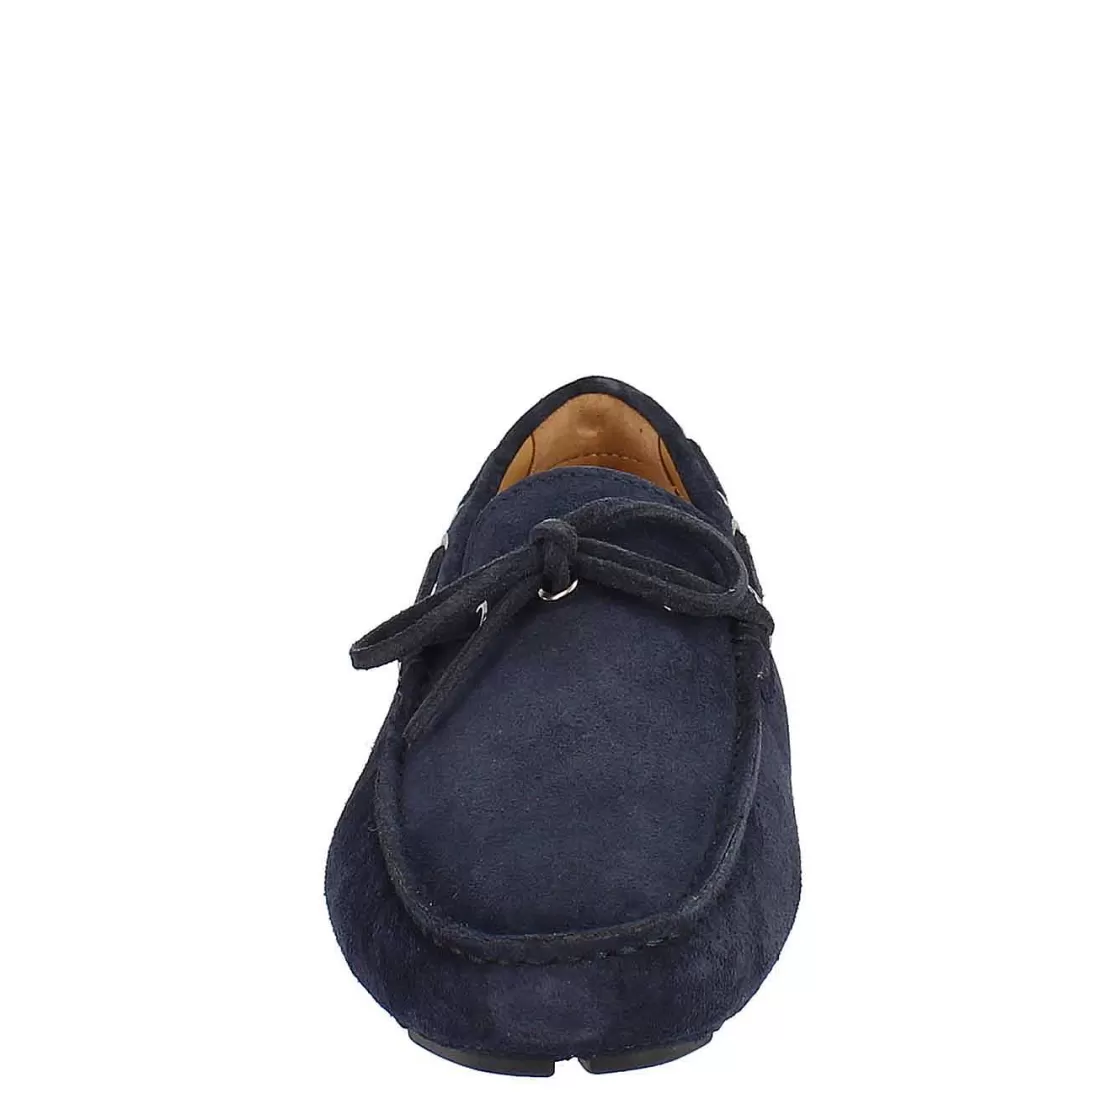 Leonardo Handmade Men'S Carshoe Loafers In Navy Blue Suede Leather. Cheap